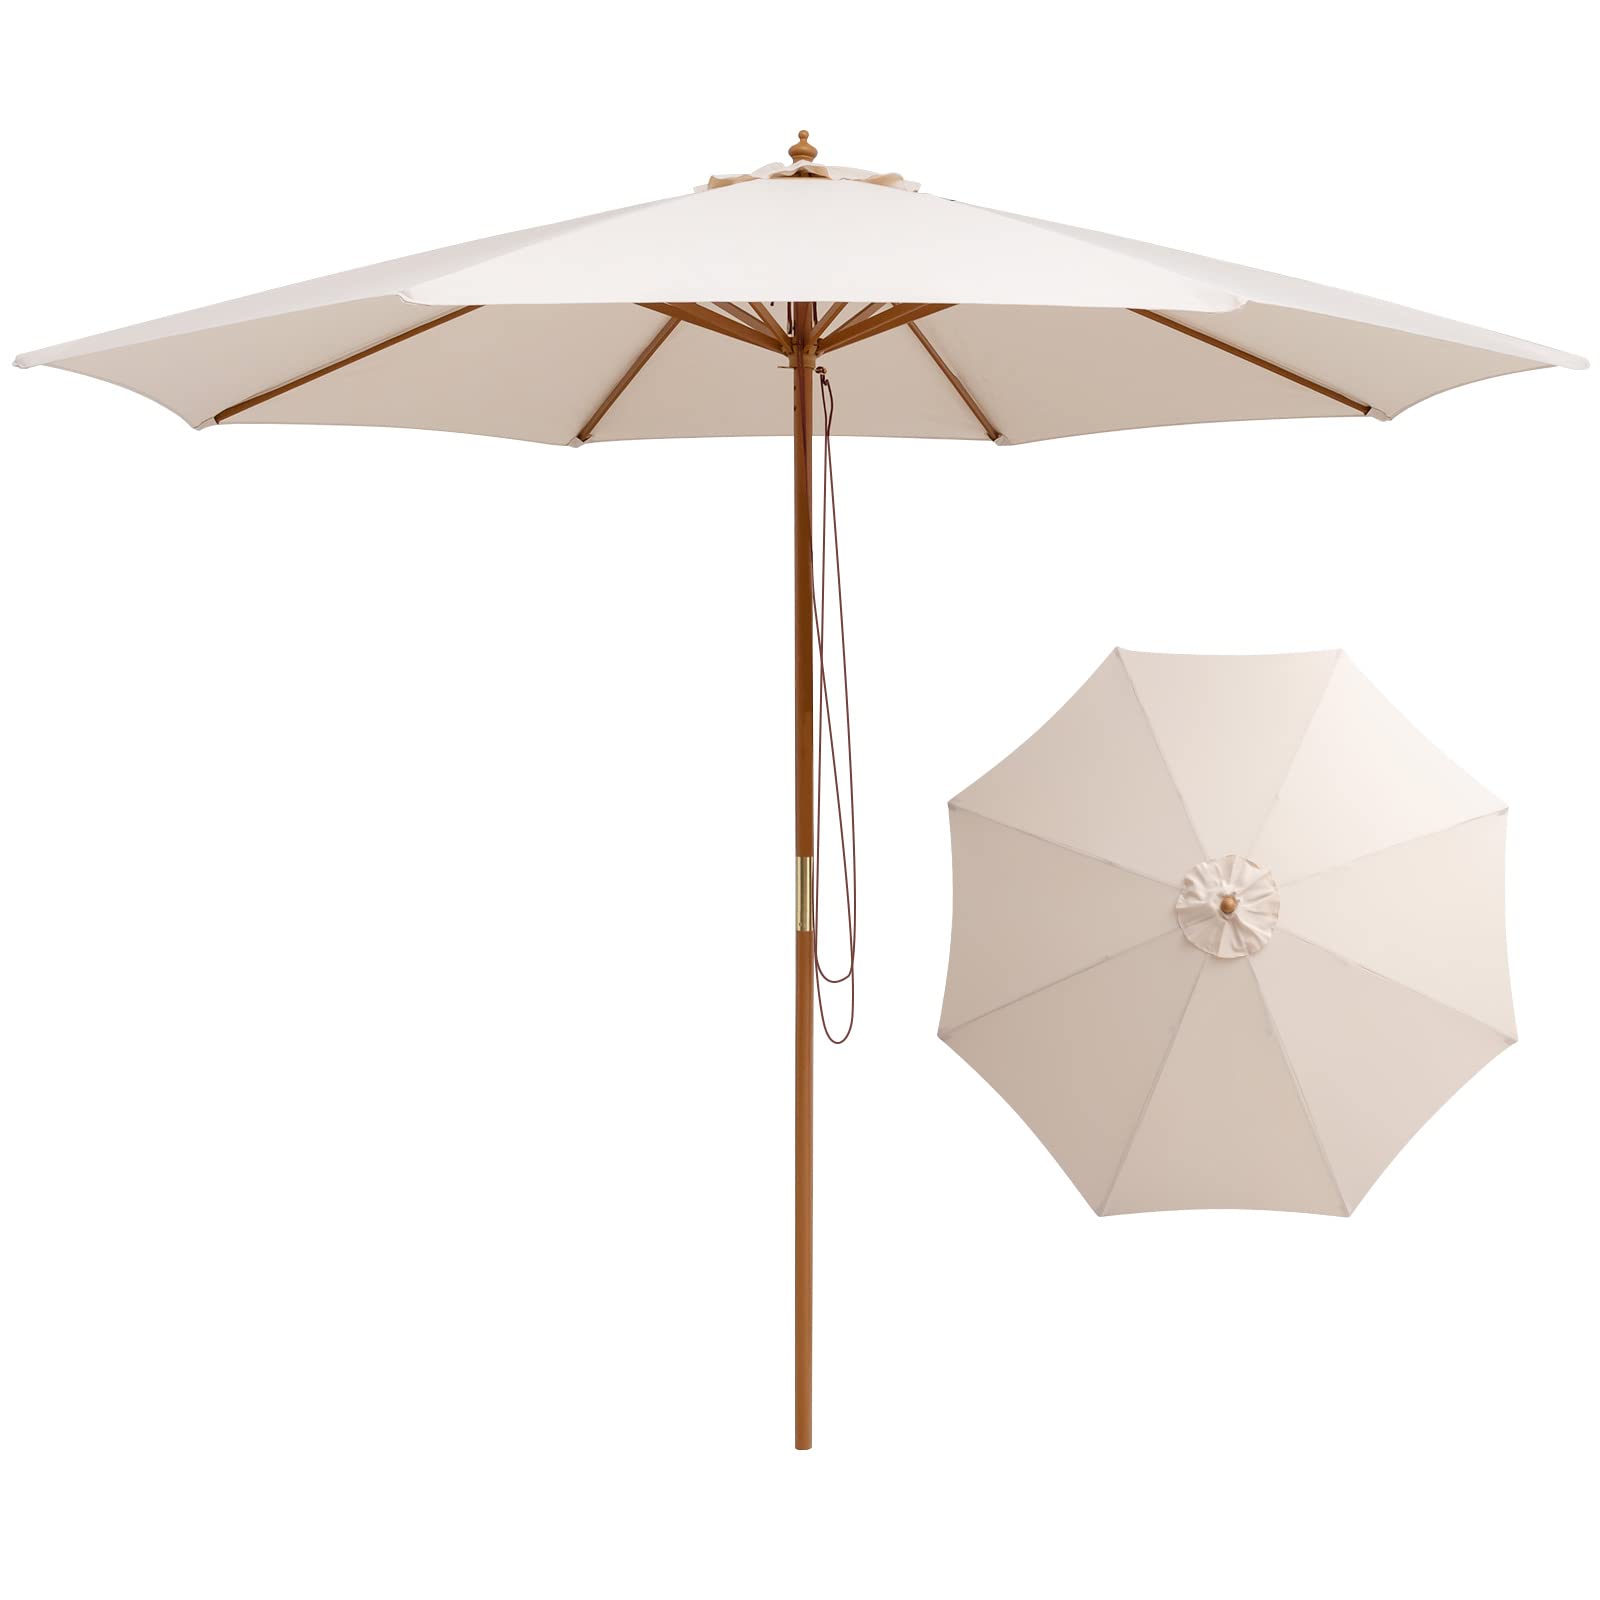 Giantex 10FT Patio Umbrella